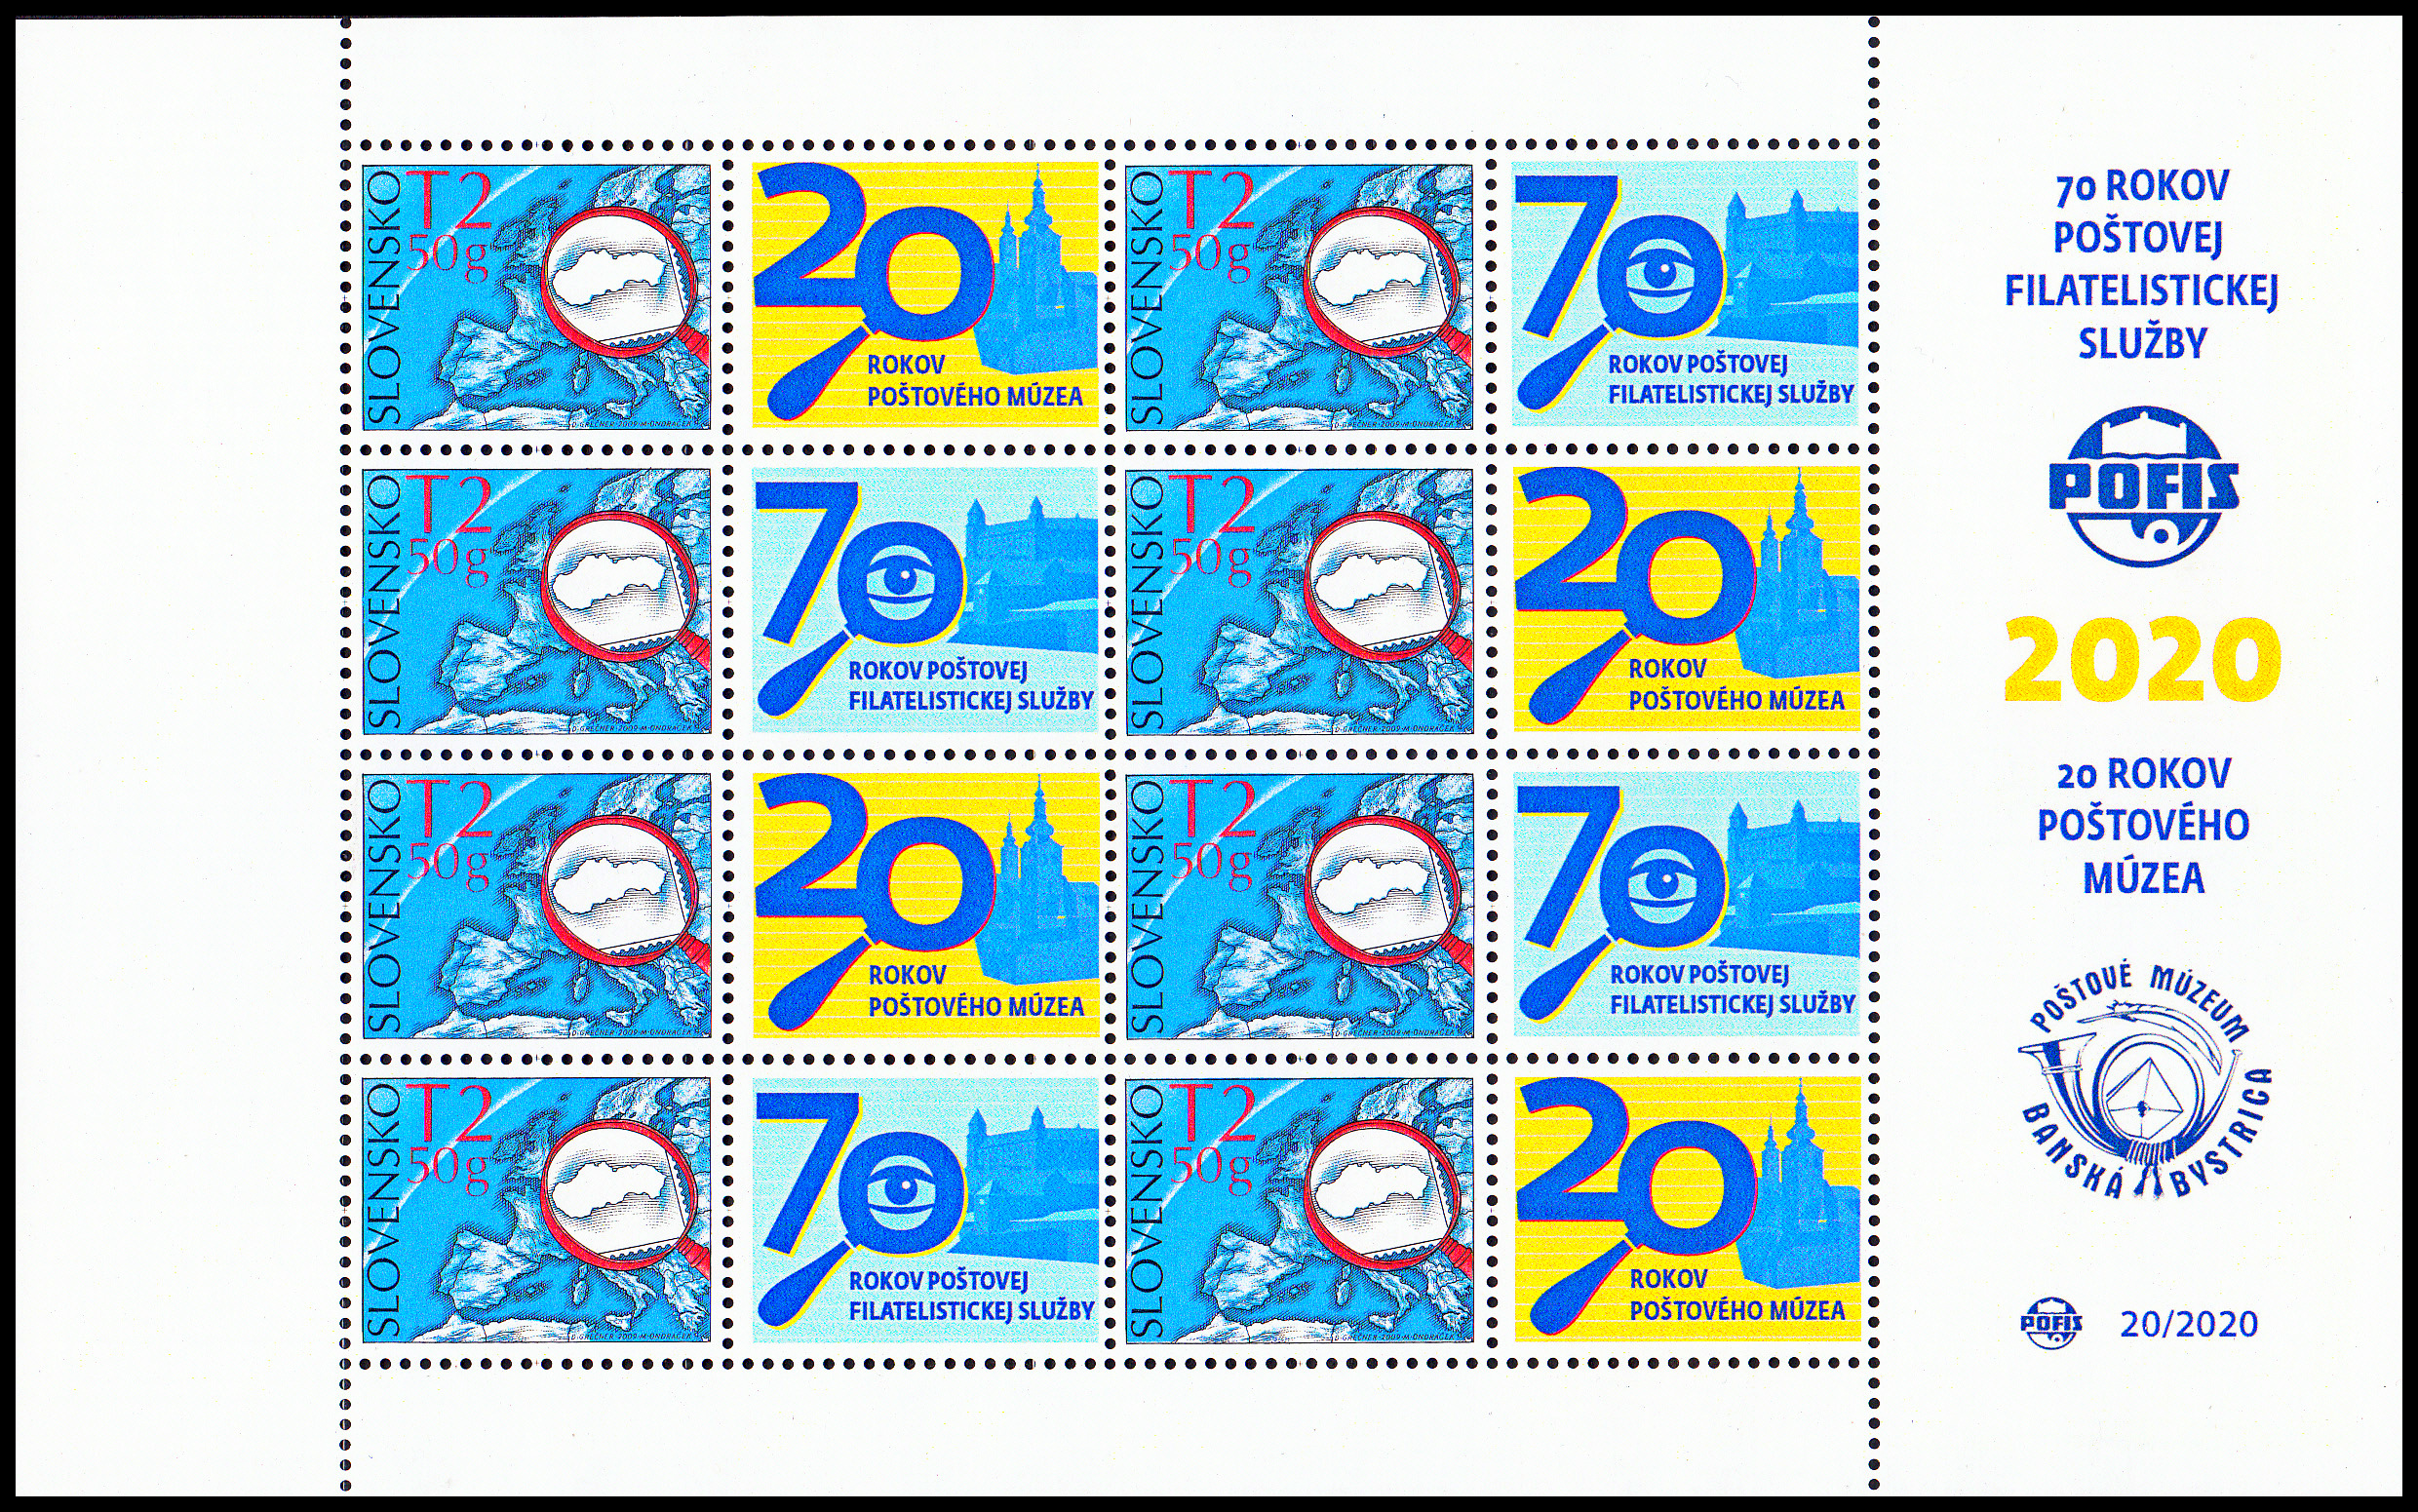 Tiskový list známky s personalizovaným kupónem - 70. výročie POFIS  (č.zn.453)